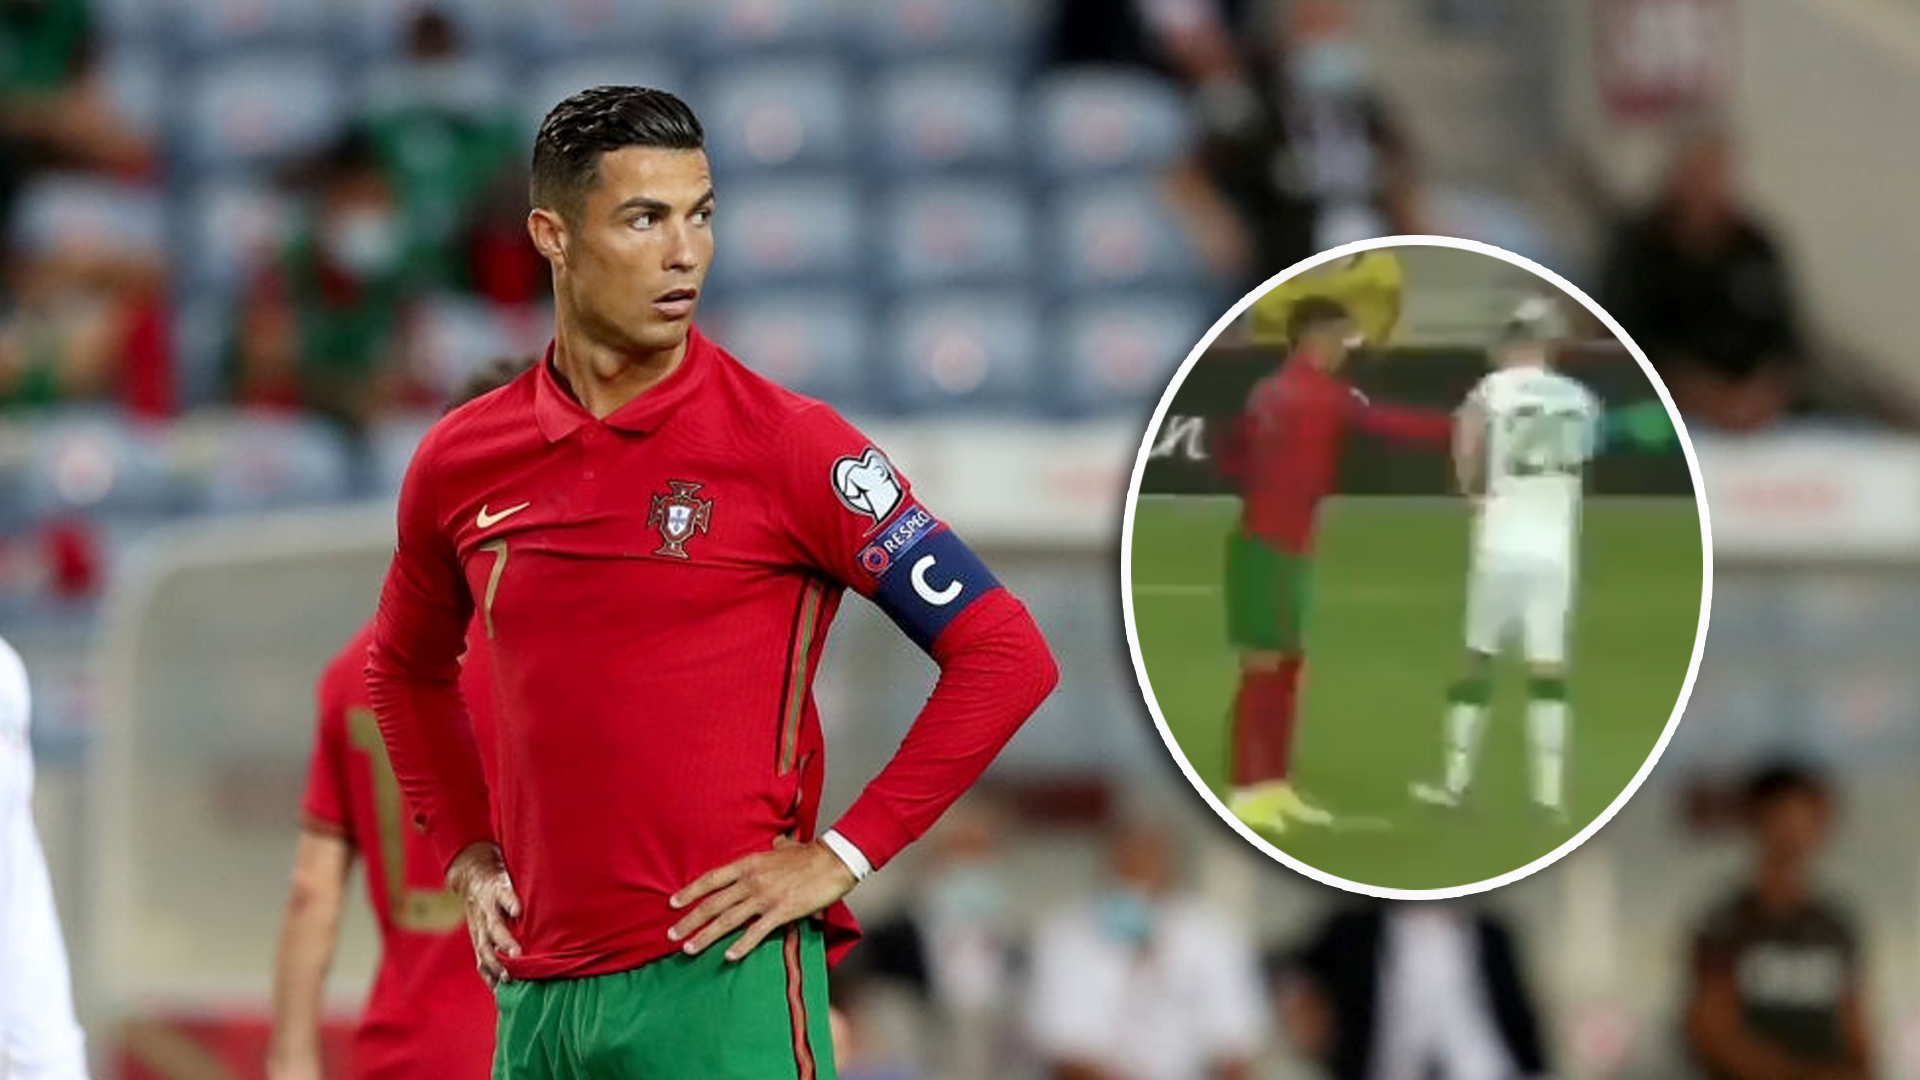 Le mauvais geste de Cristiano Ronaldo, qui gifle un adversaire en plein match